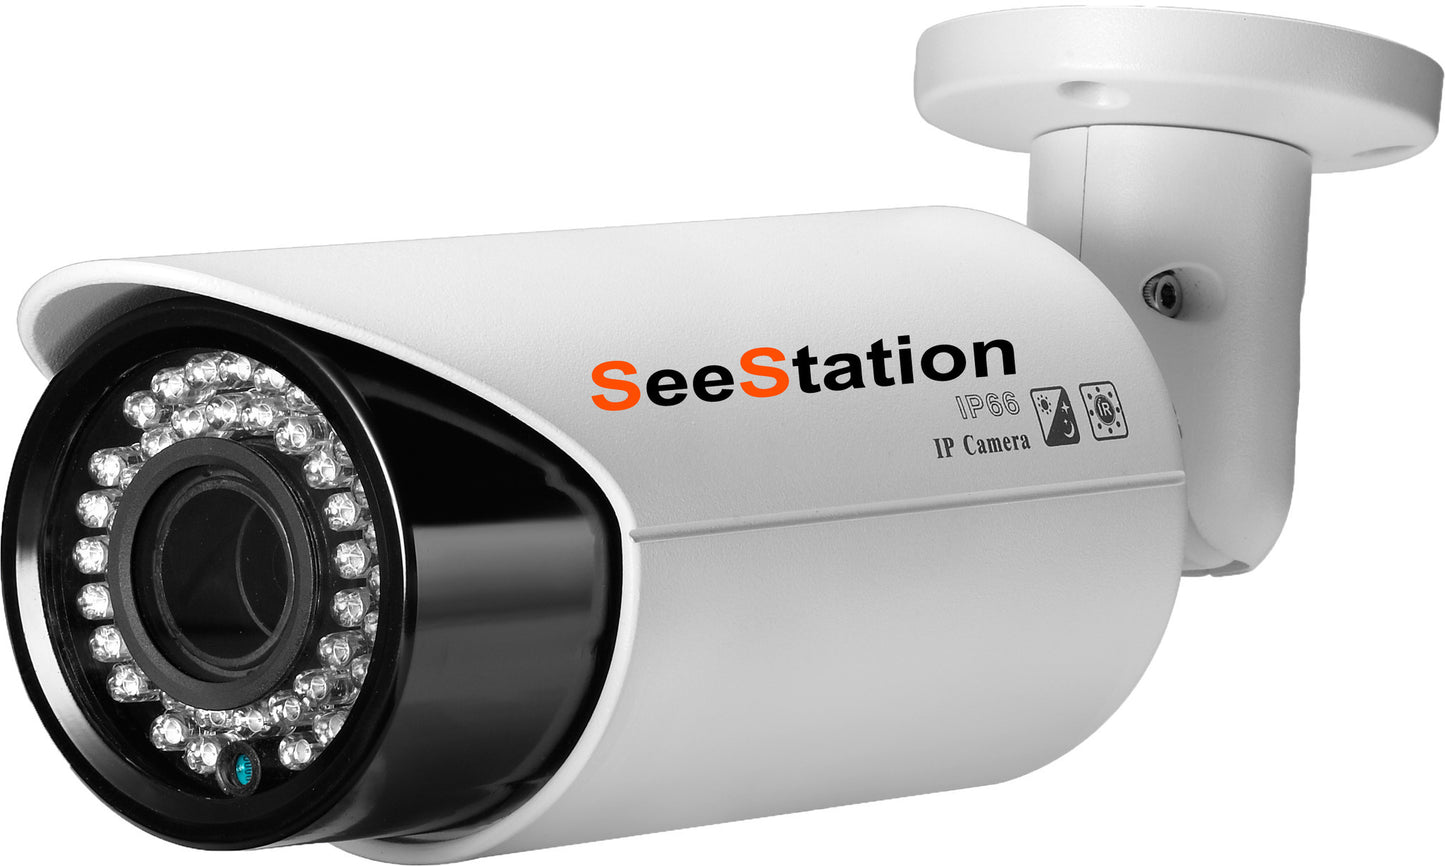 SeeStation (IP) CIP1220V-2W IP Bullet Camera 1.3MP IR POE ONVIF 2.8-12mm Varifocal HD Lens